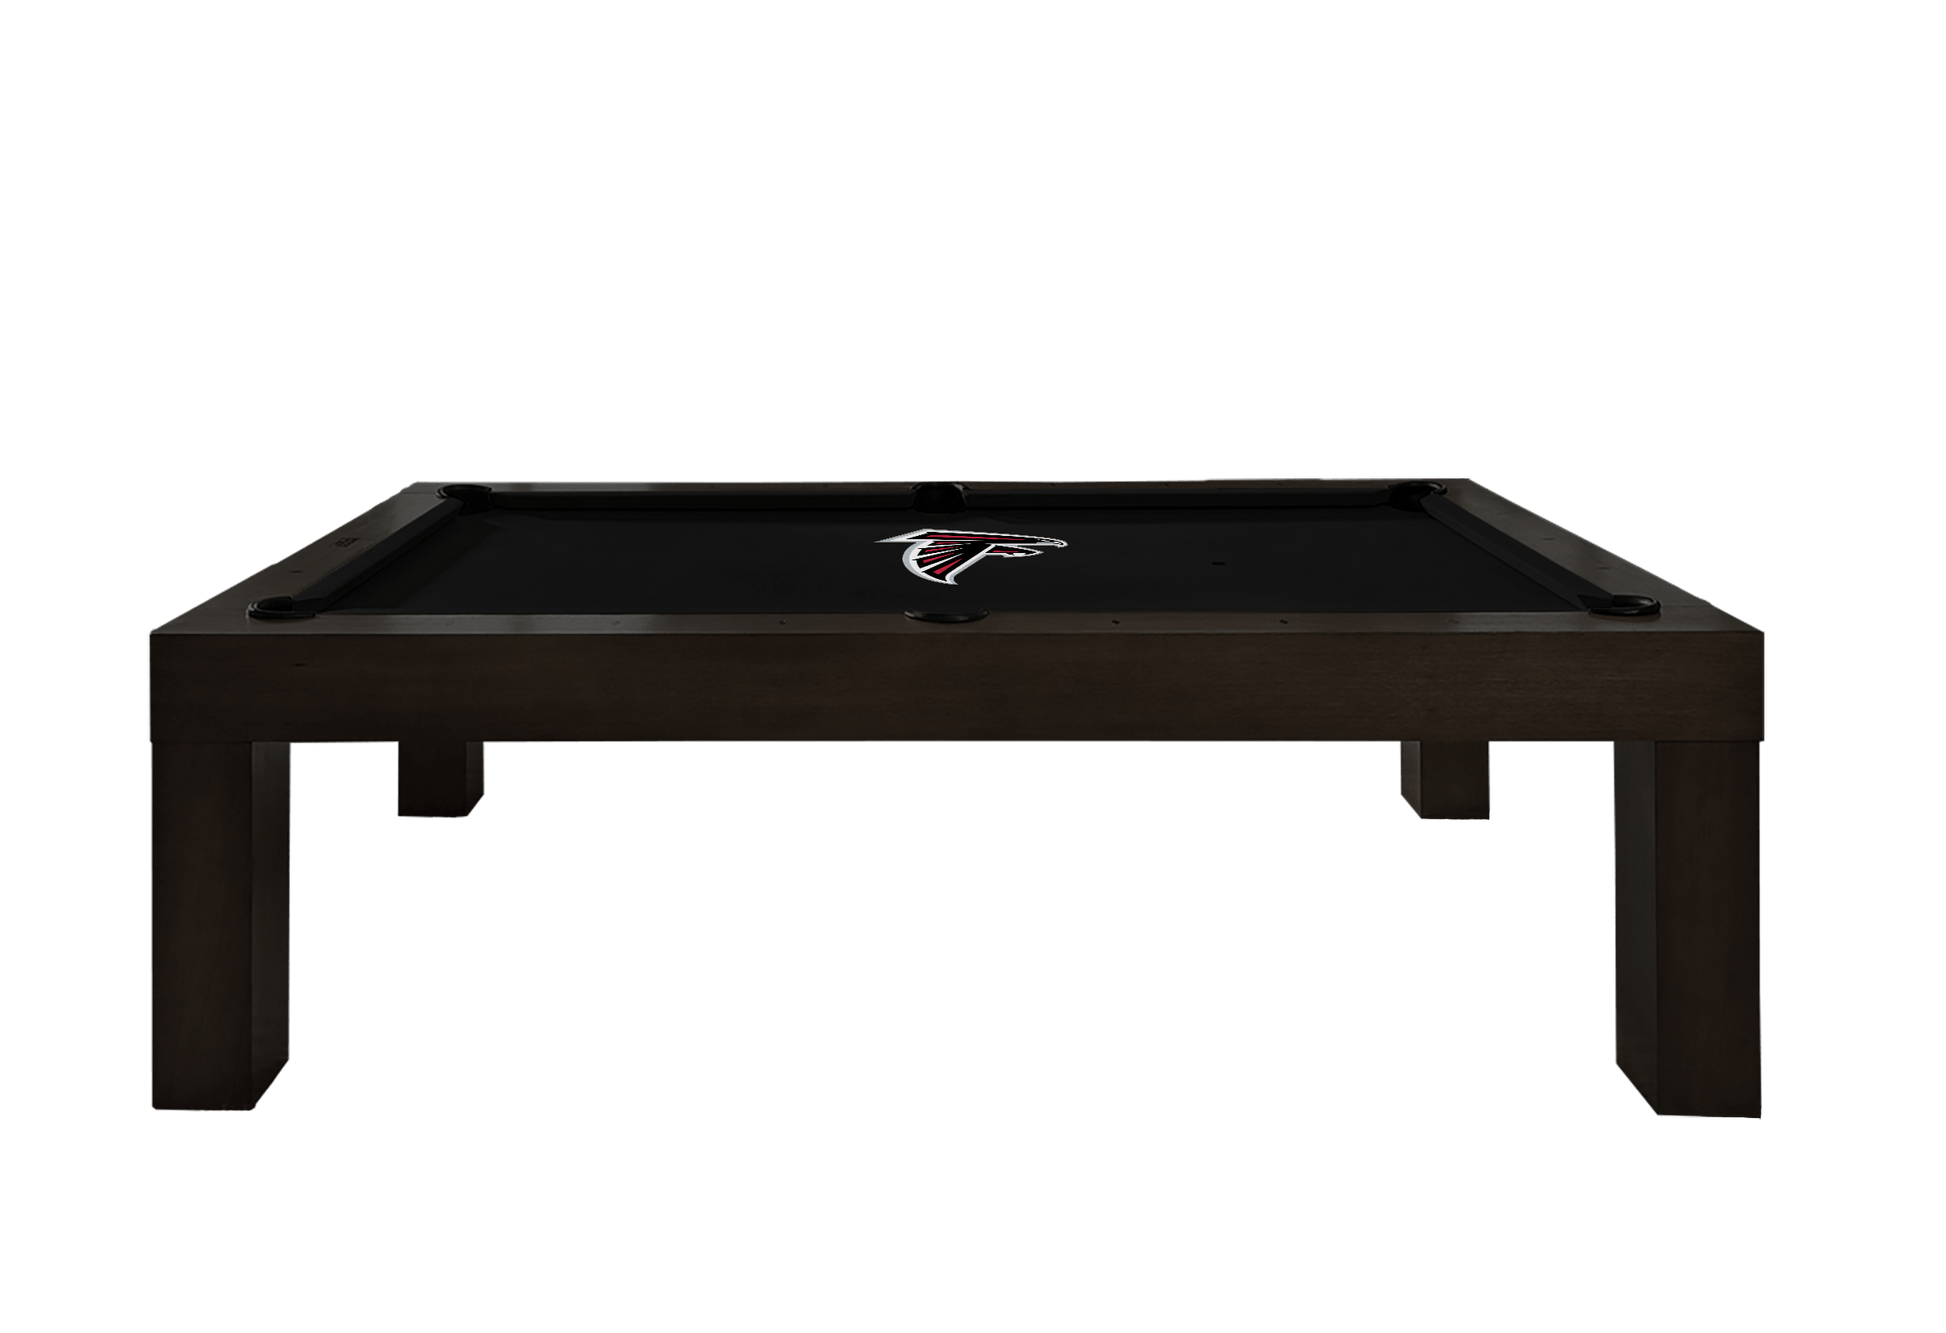 Atlanta Falcons Premium Pool Table Bundle - Black Ash Pool Bundle Home Arcade Games   